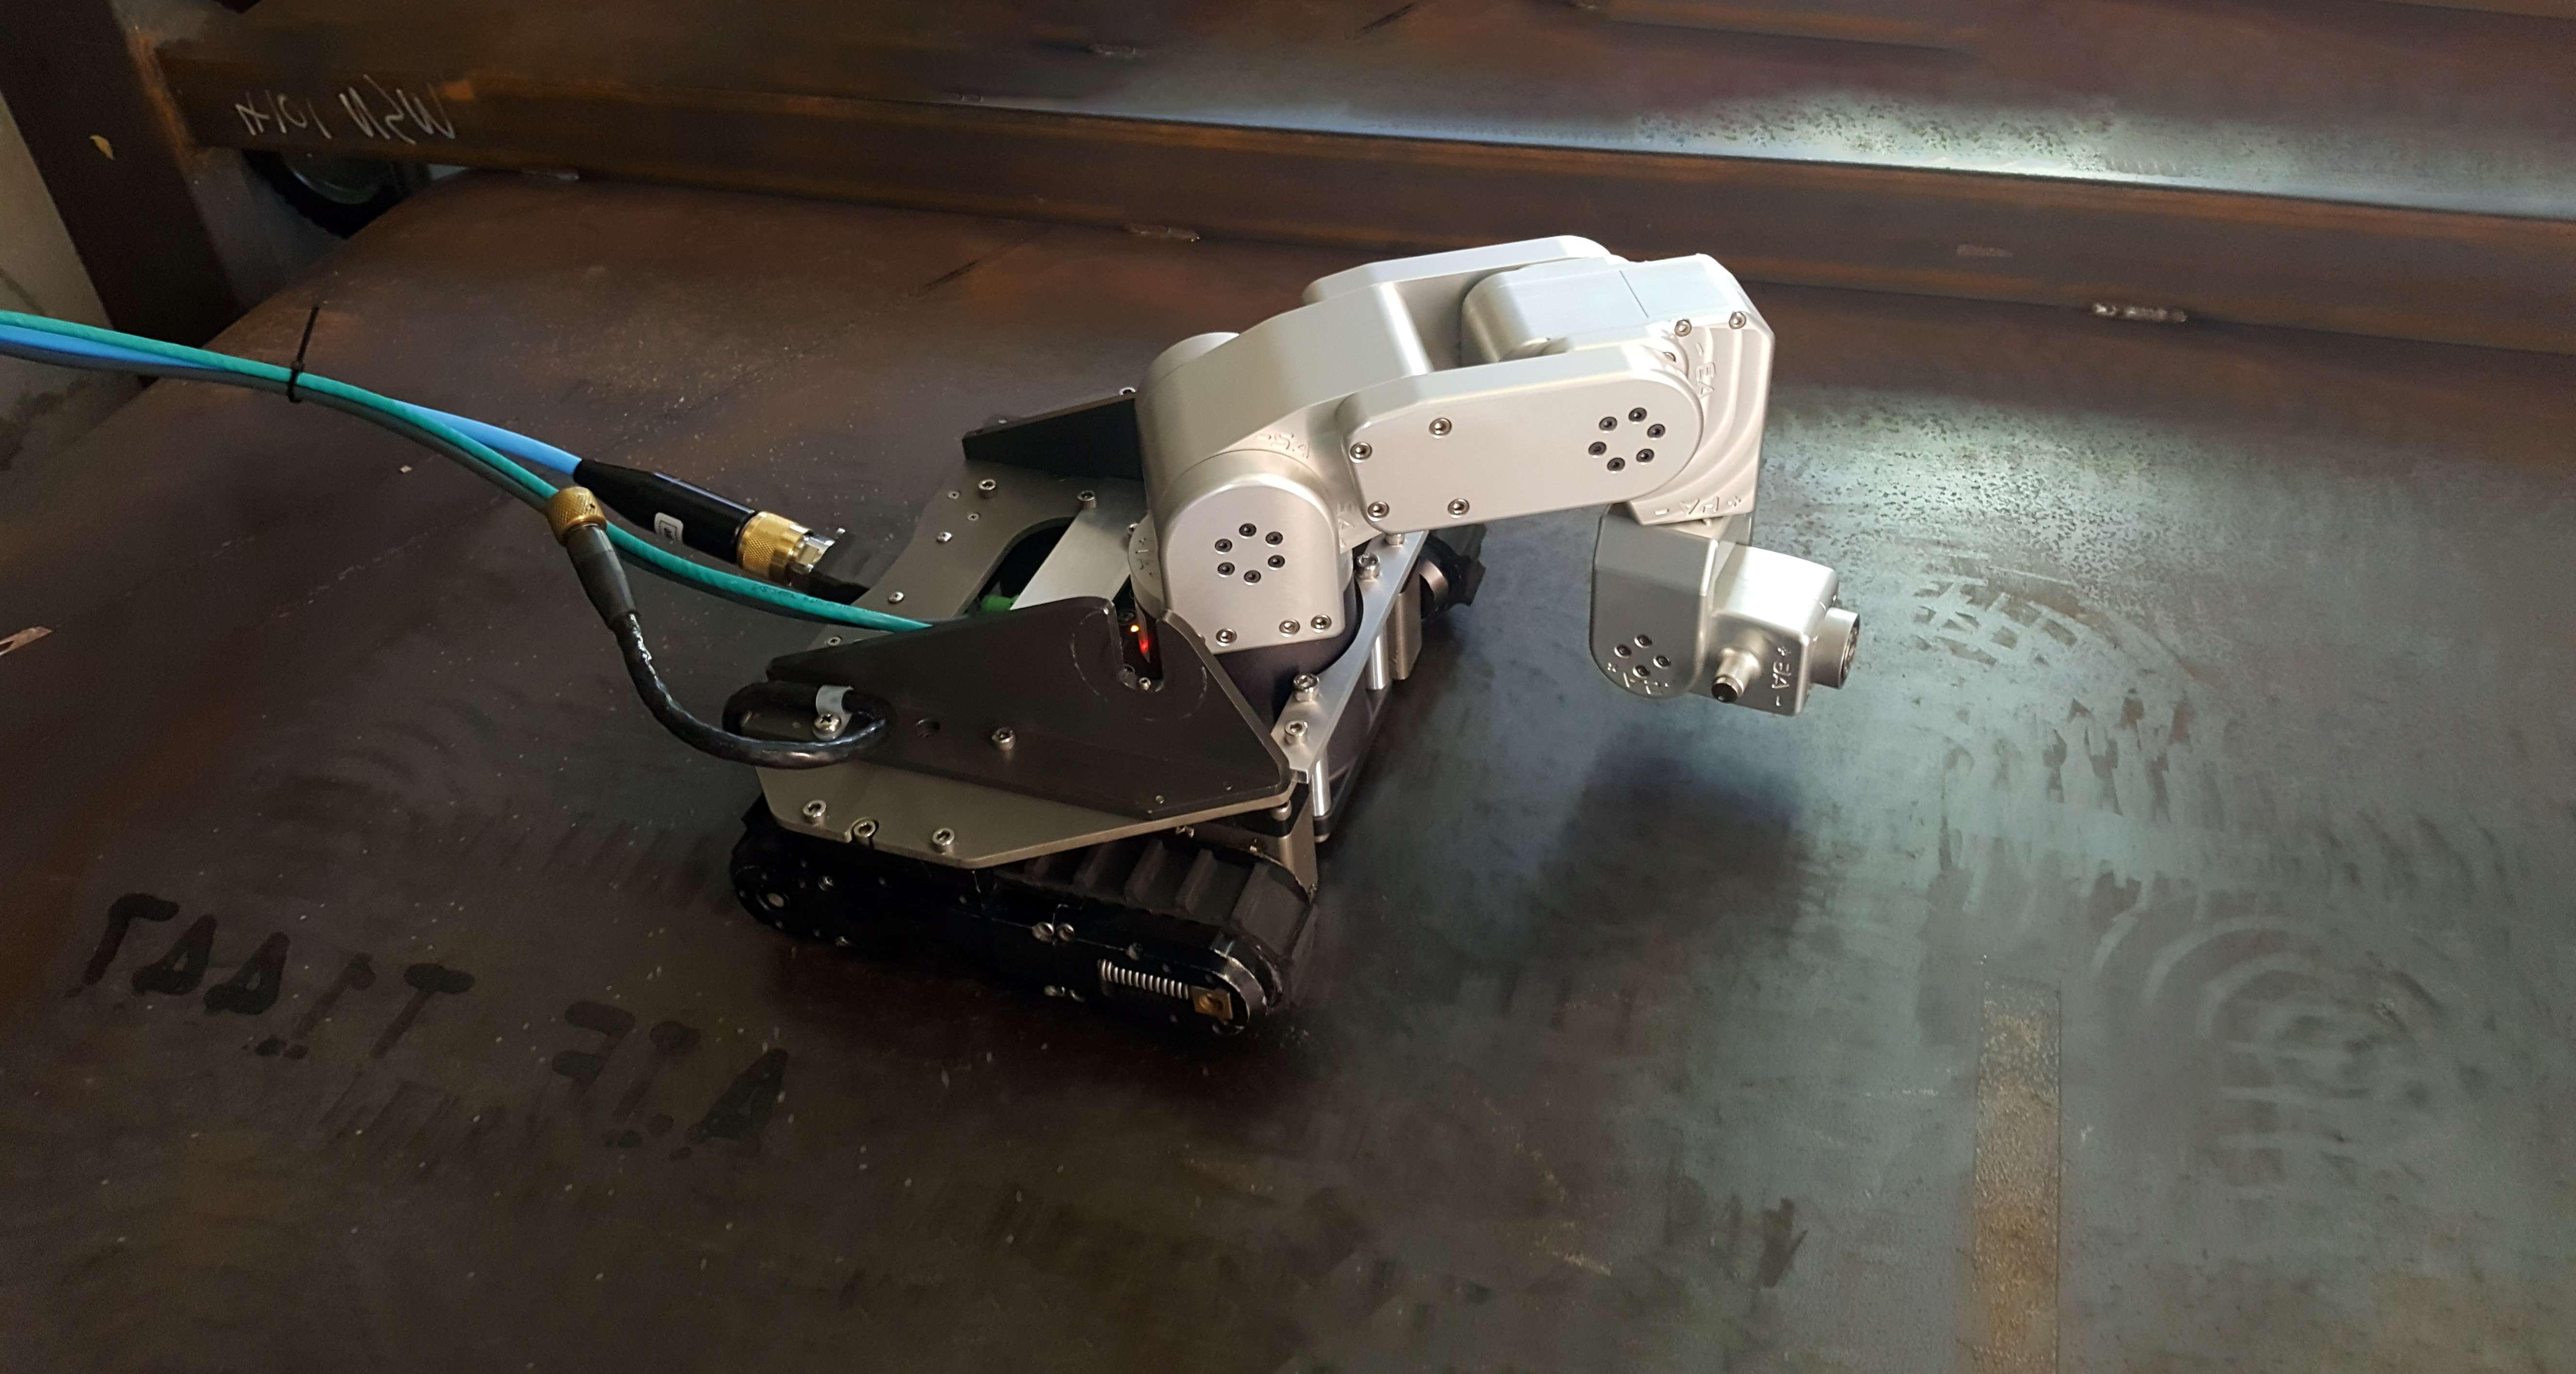 Find a Problem and Fix it With Eddyfi Robotics